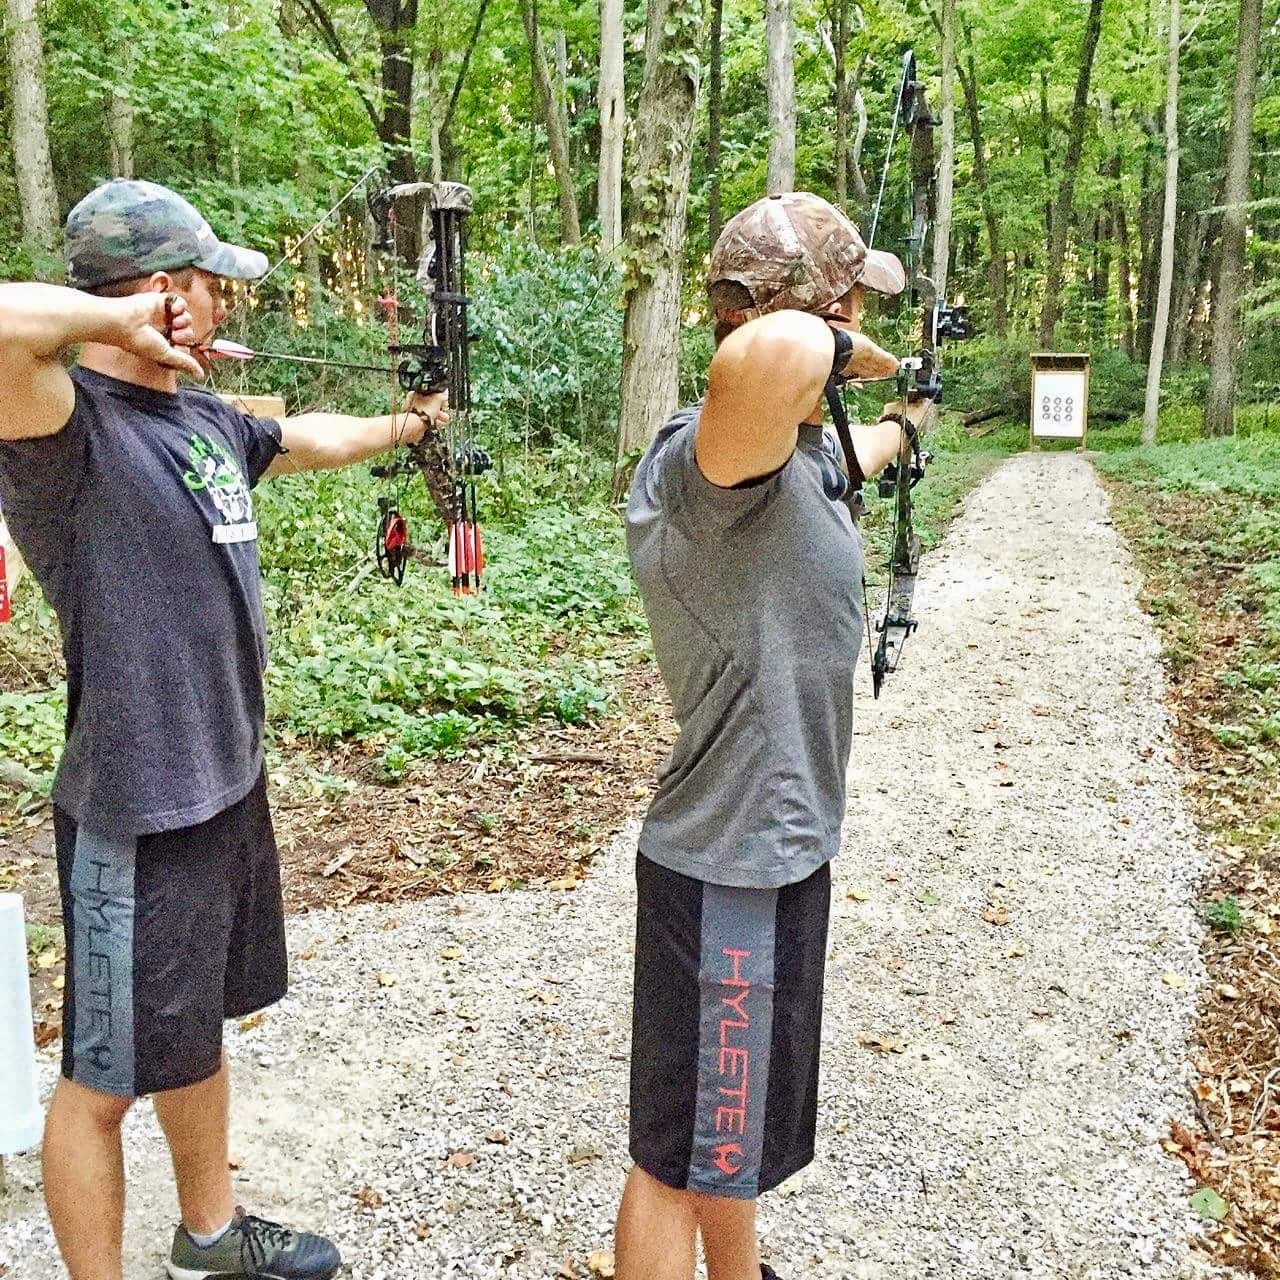 Archery Range Boys shooting